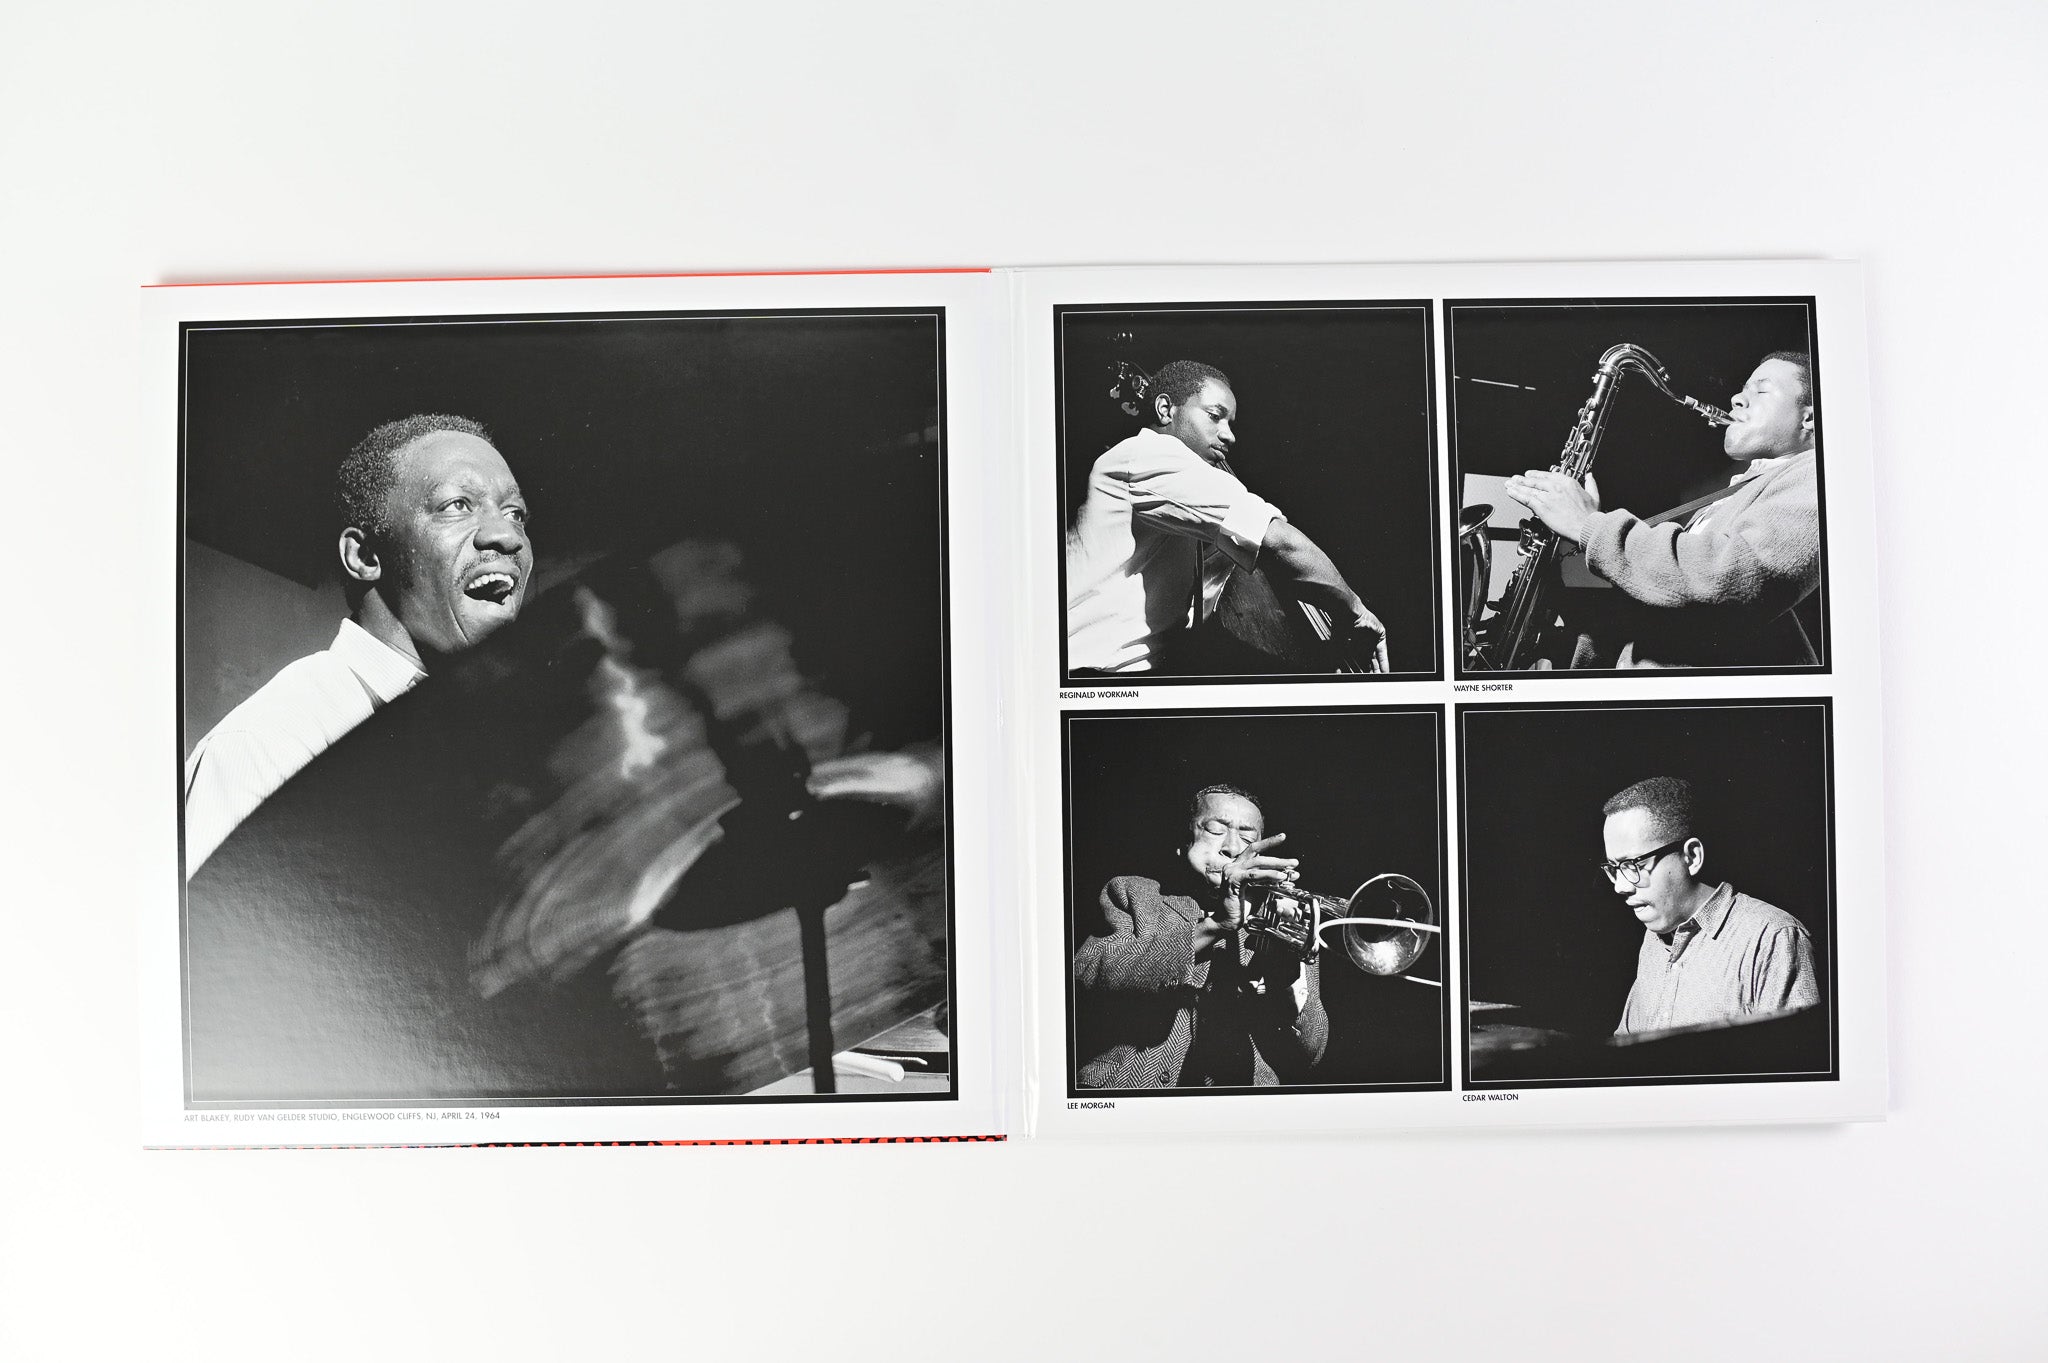 Art Blakey & The Jazz Messengers - Indestructible on Blue Note Music Matters Ltd Reissue 45 RPM